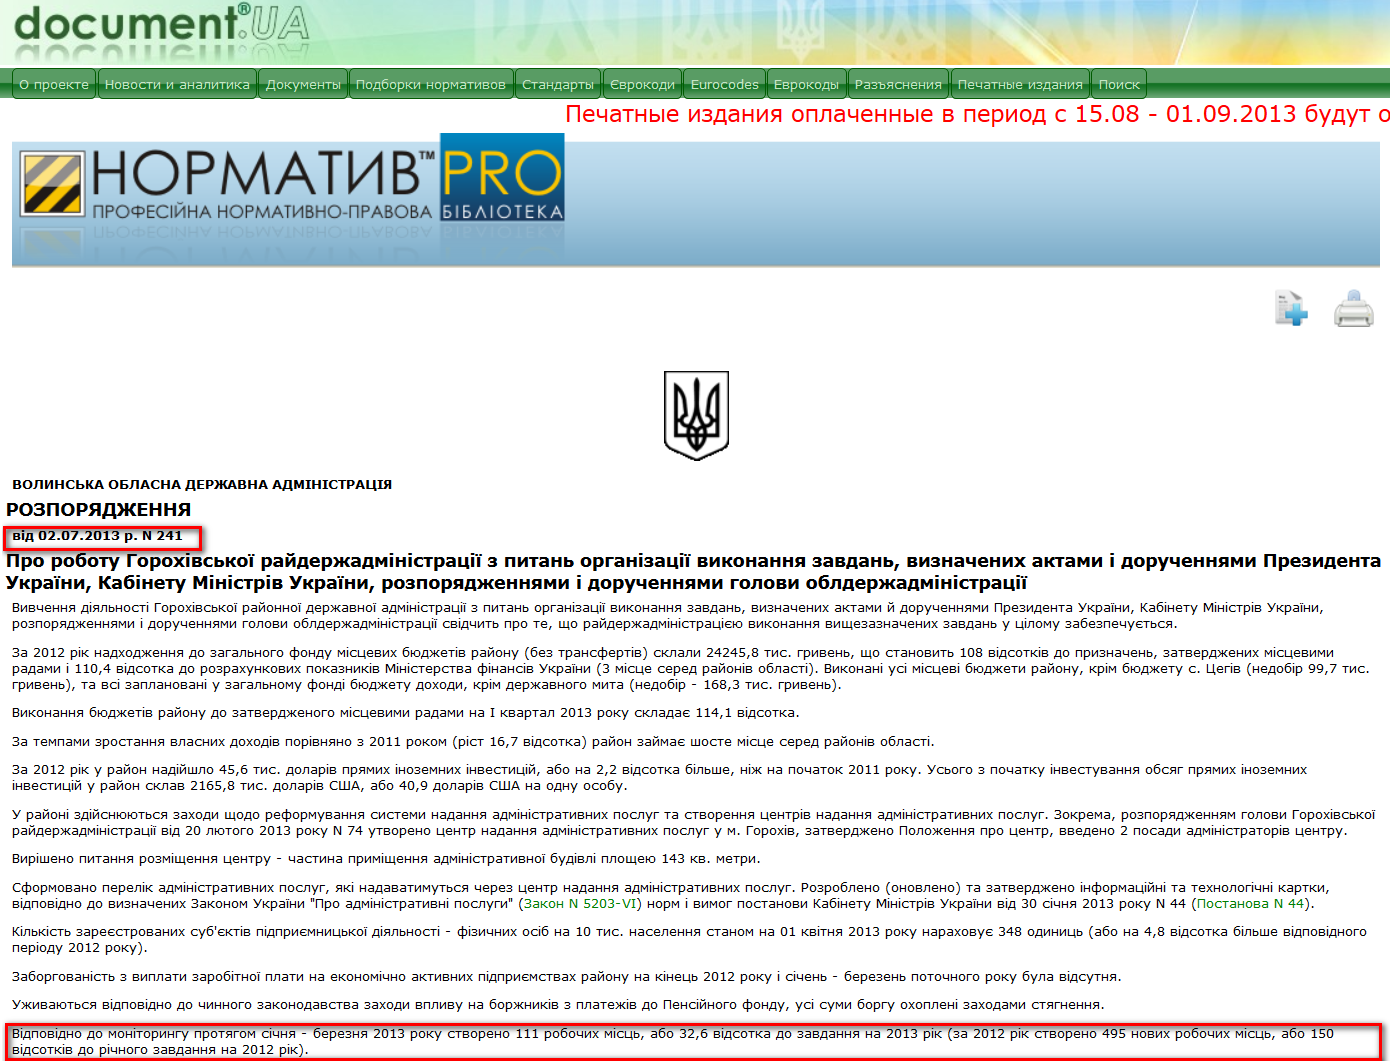 http://document.ua/pro-robotu-gorohivskoyi-raiderzhadministraciyi-z-pitan-organ-doc150160.html